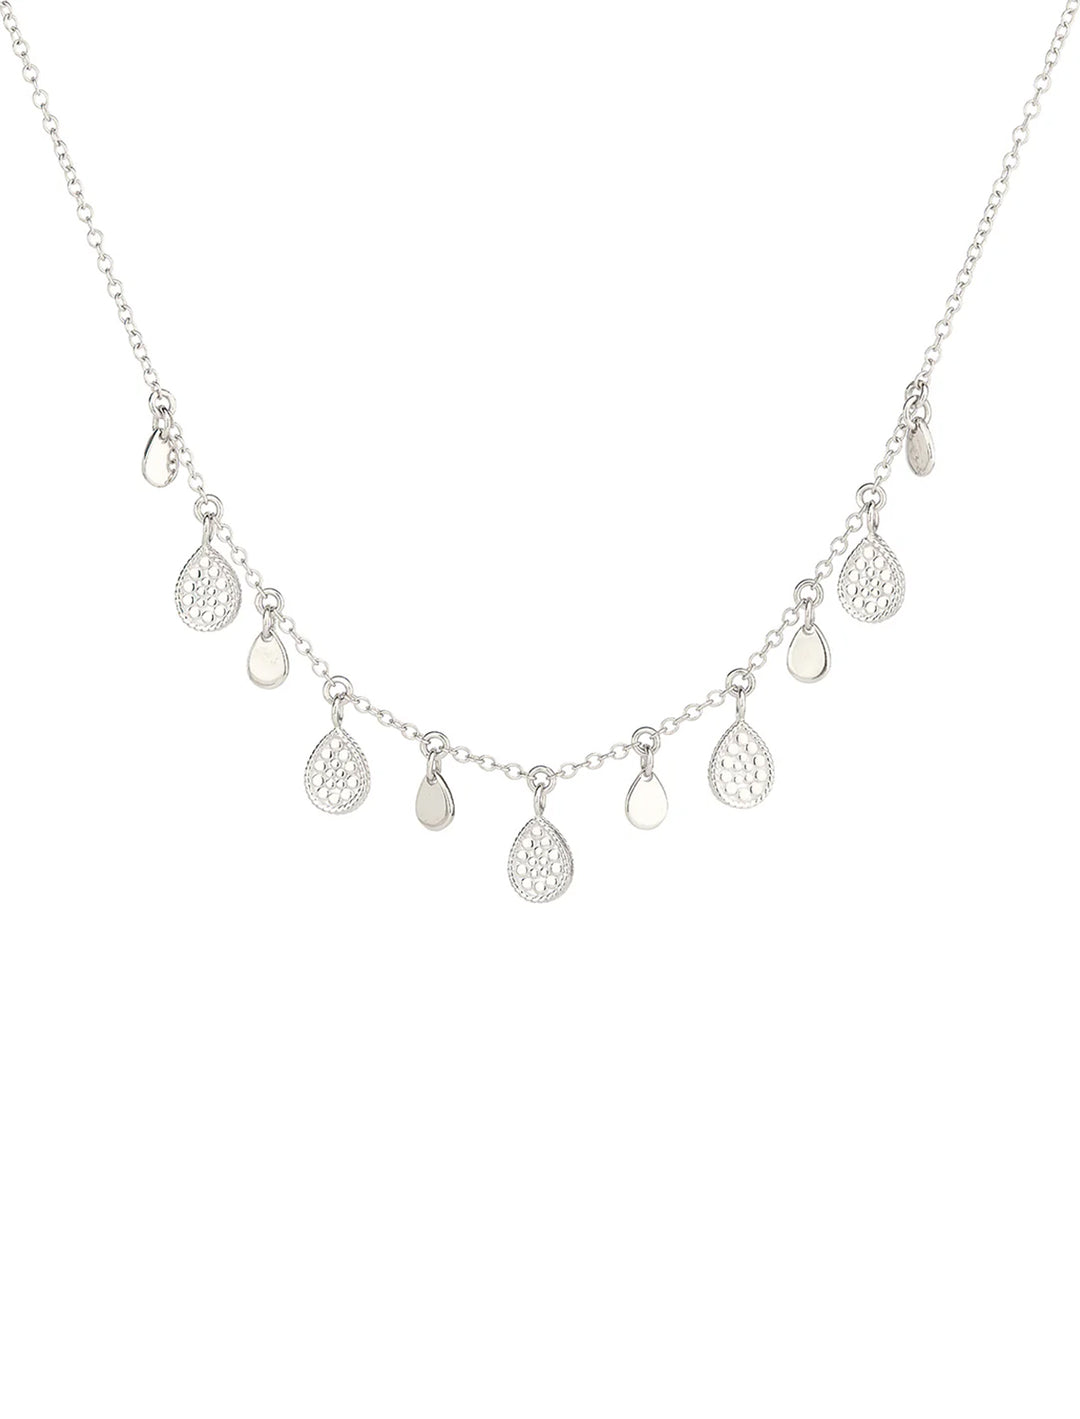 teardrop charm necklace in silver